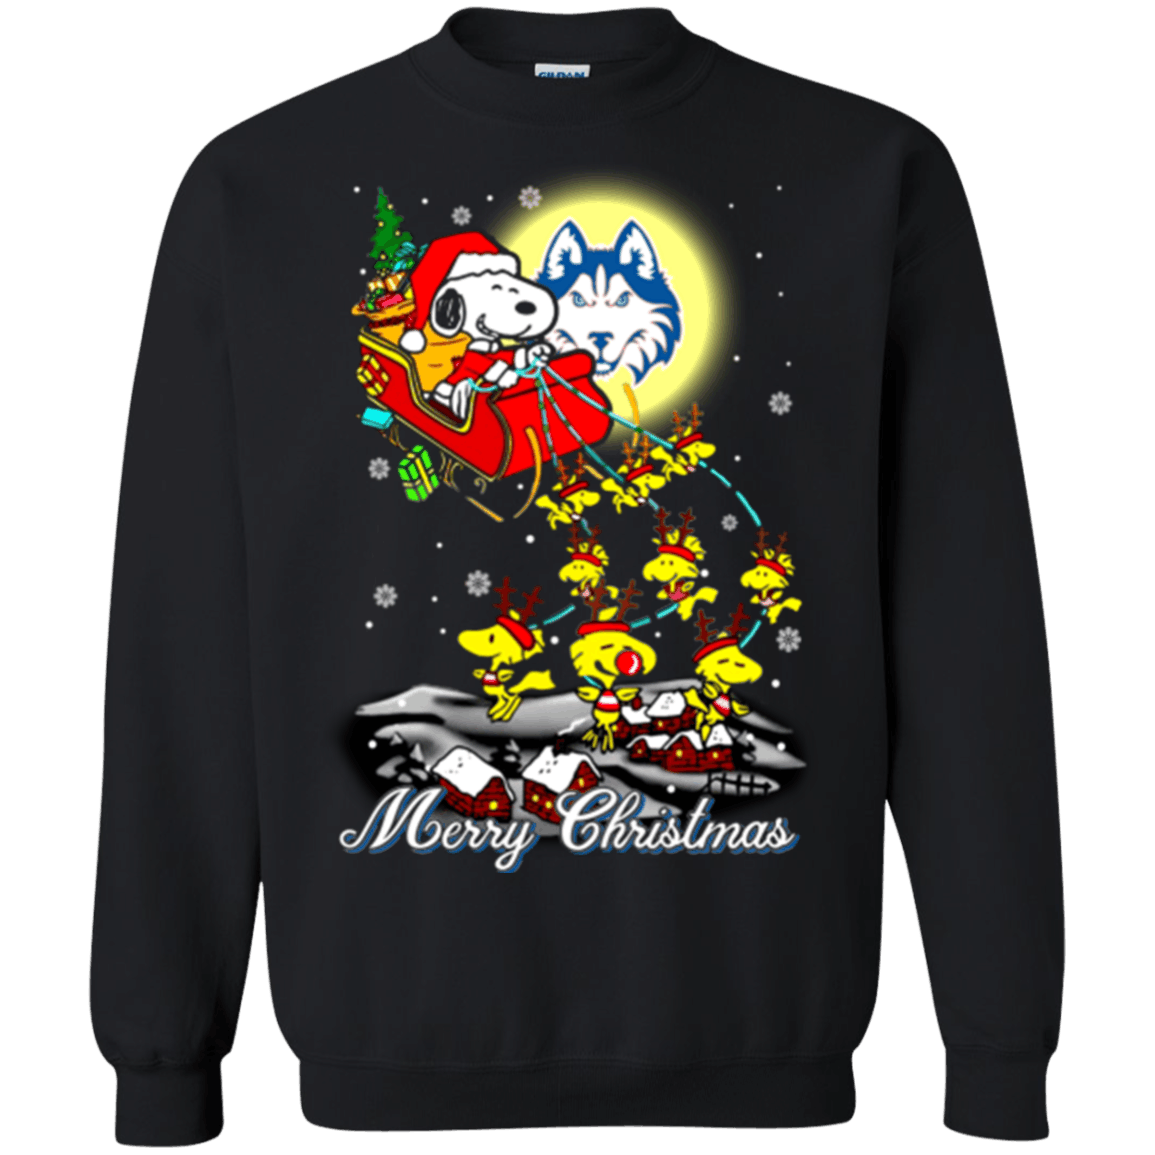 Amazing Houston Baptist Huskies Snoopy Ugly Christmas Sweaters Santa Claus With Sleigh Sweatshirts